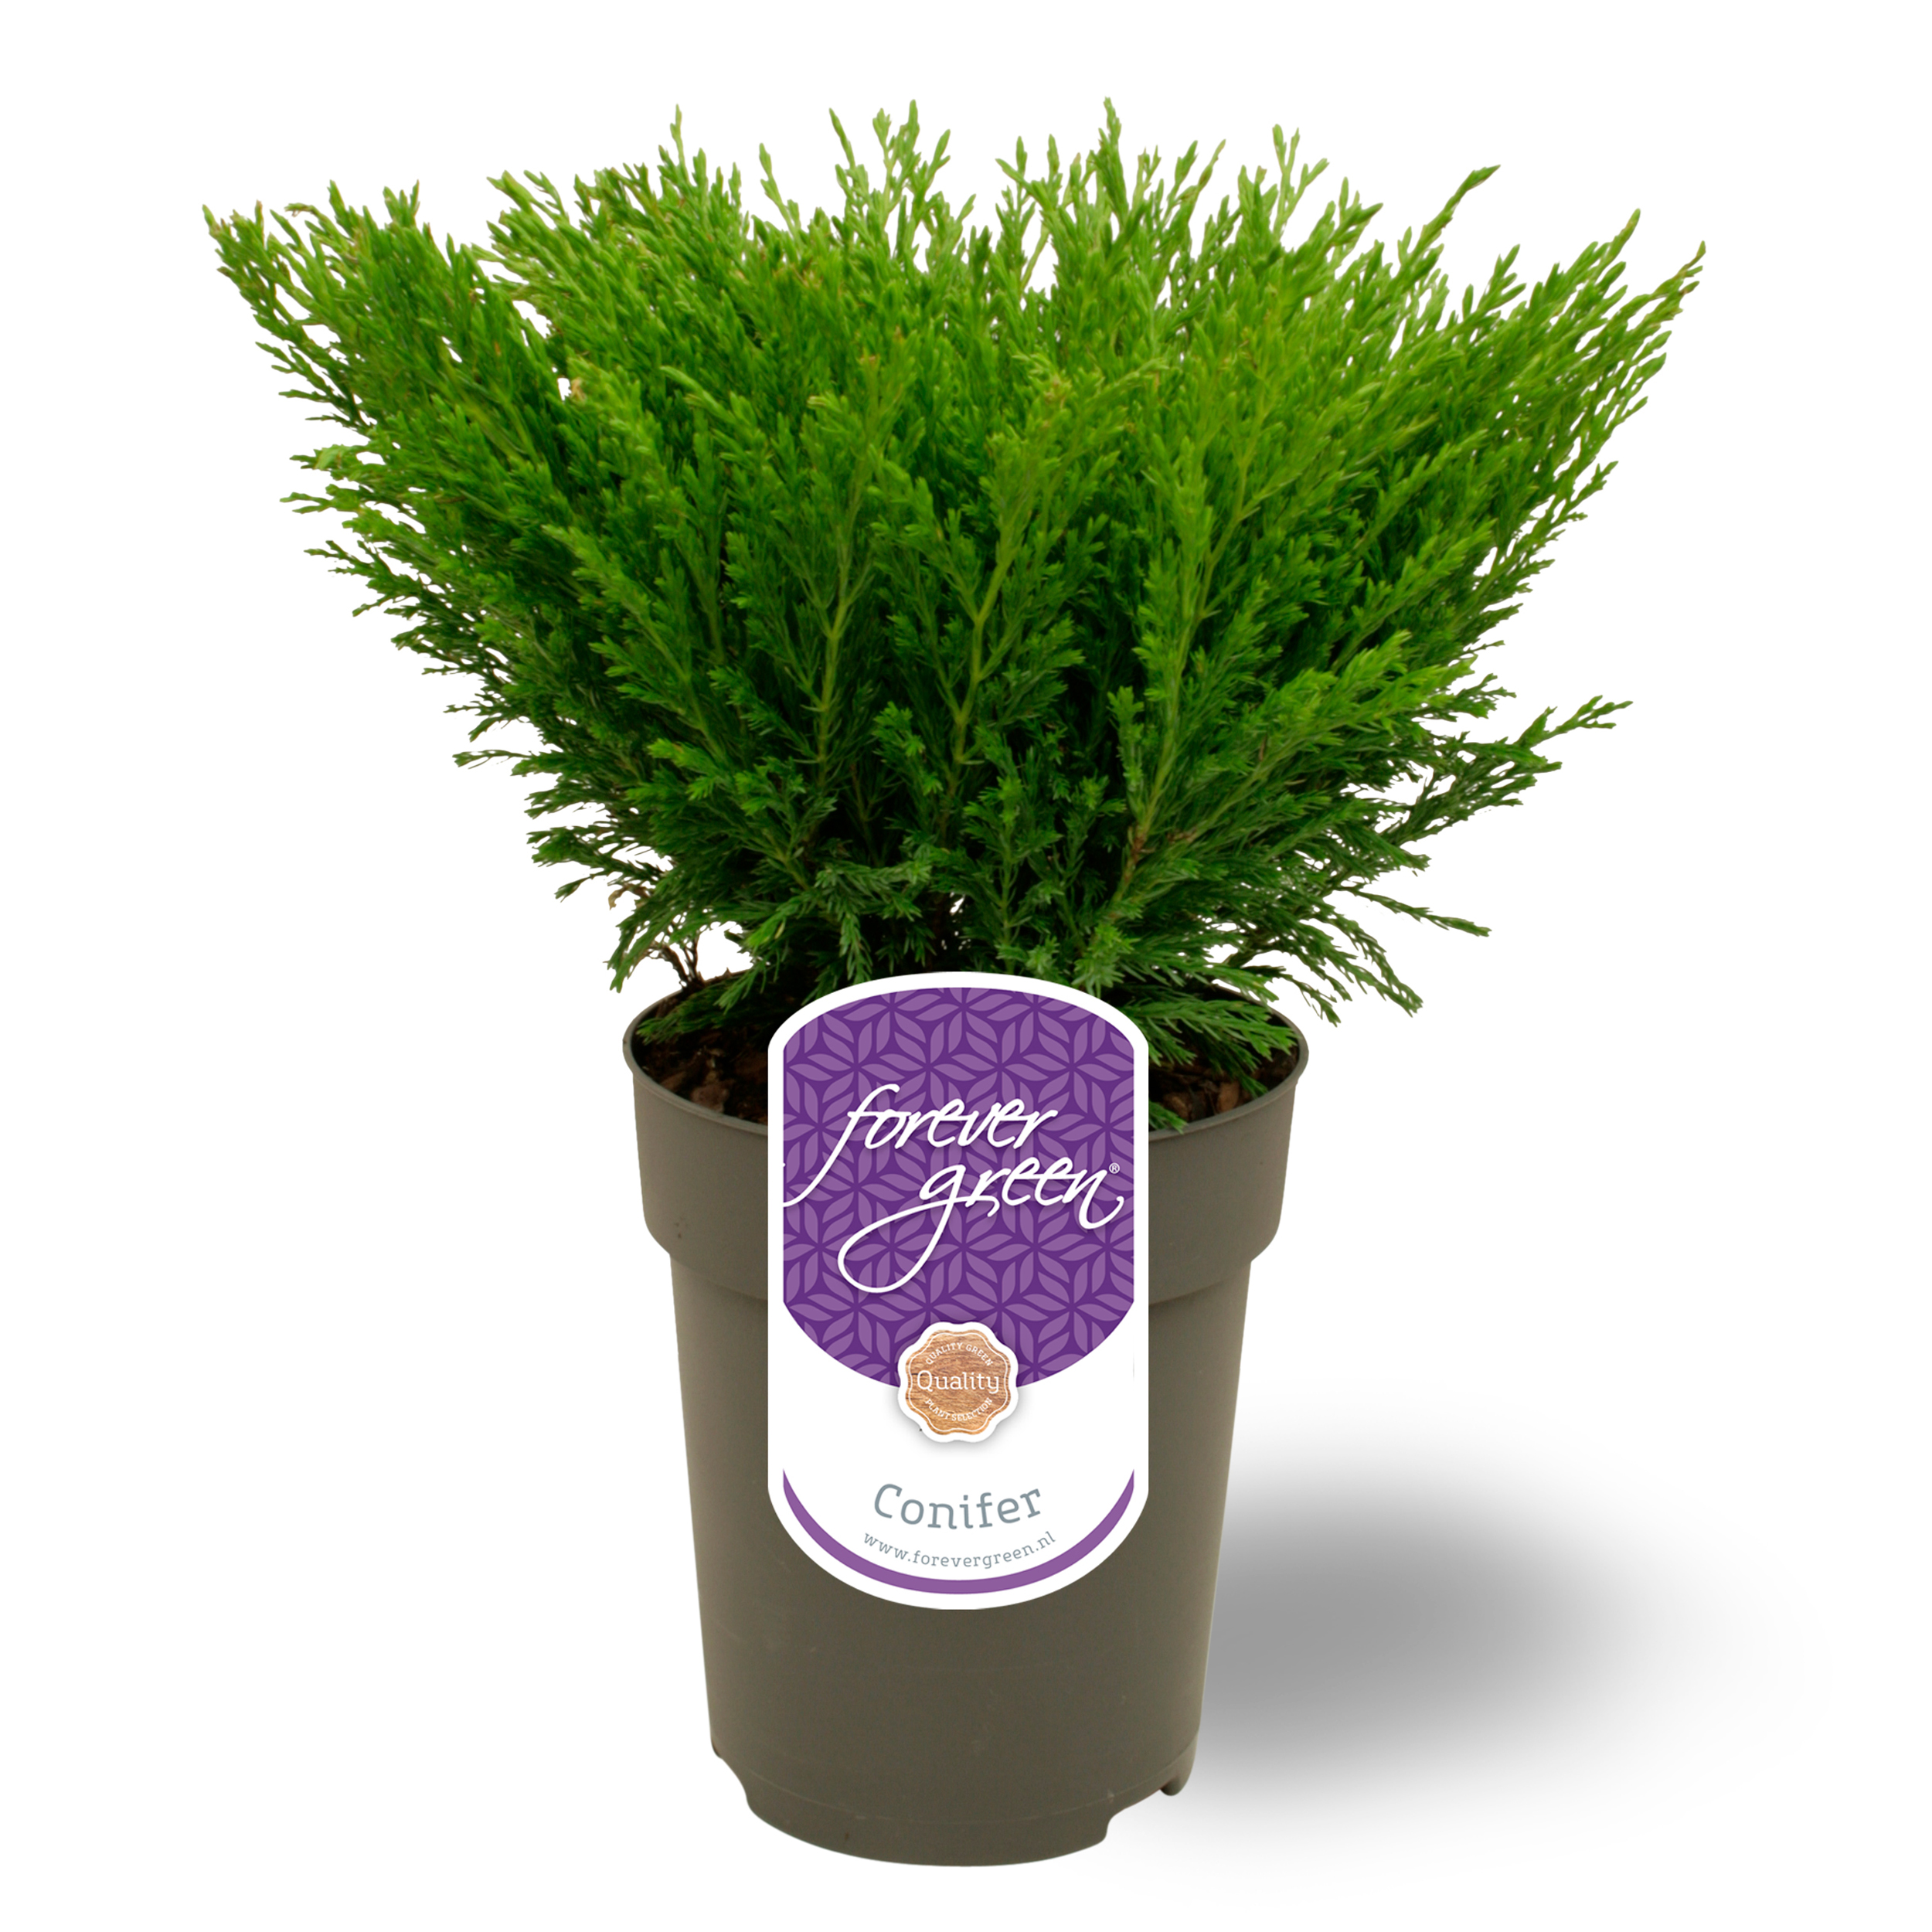 Picture of Juniperus horizontalis 'Andorra Compact' P15 - Forever Green®